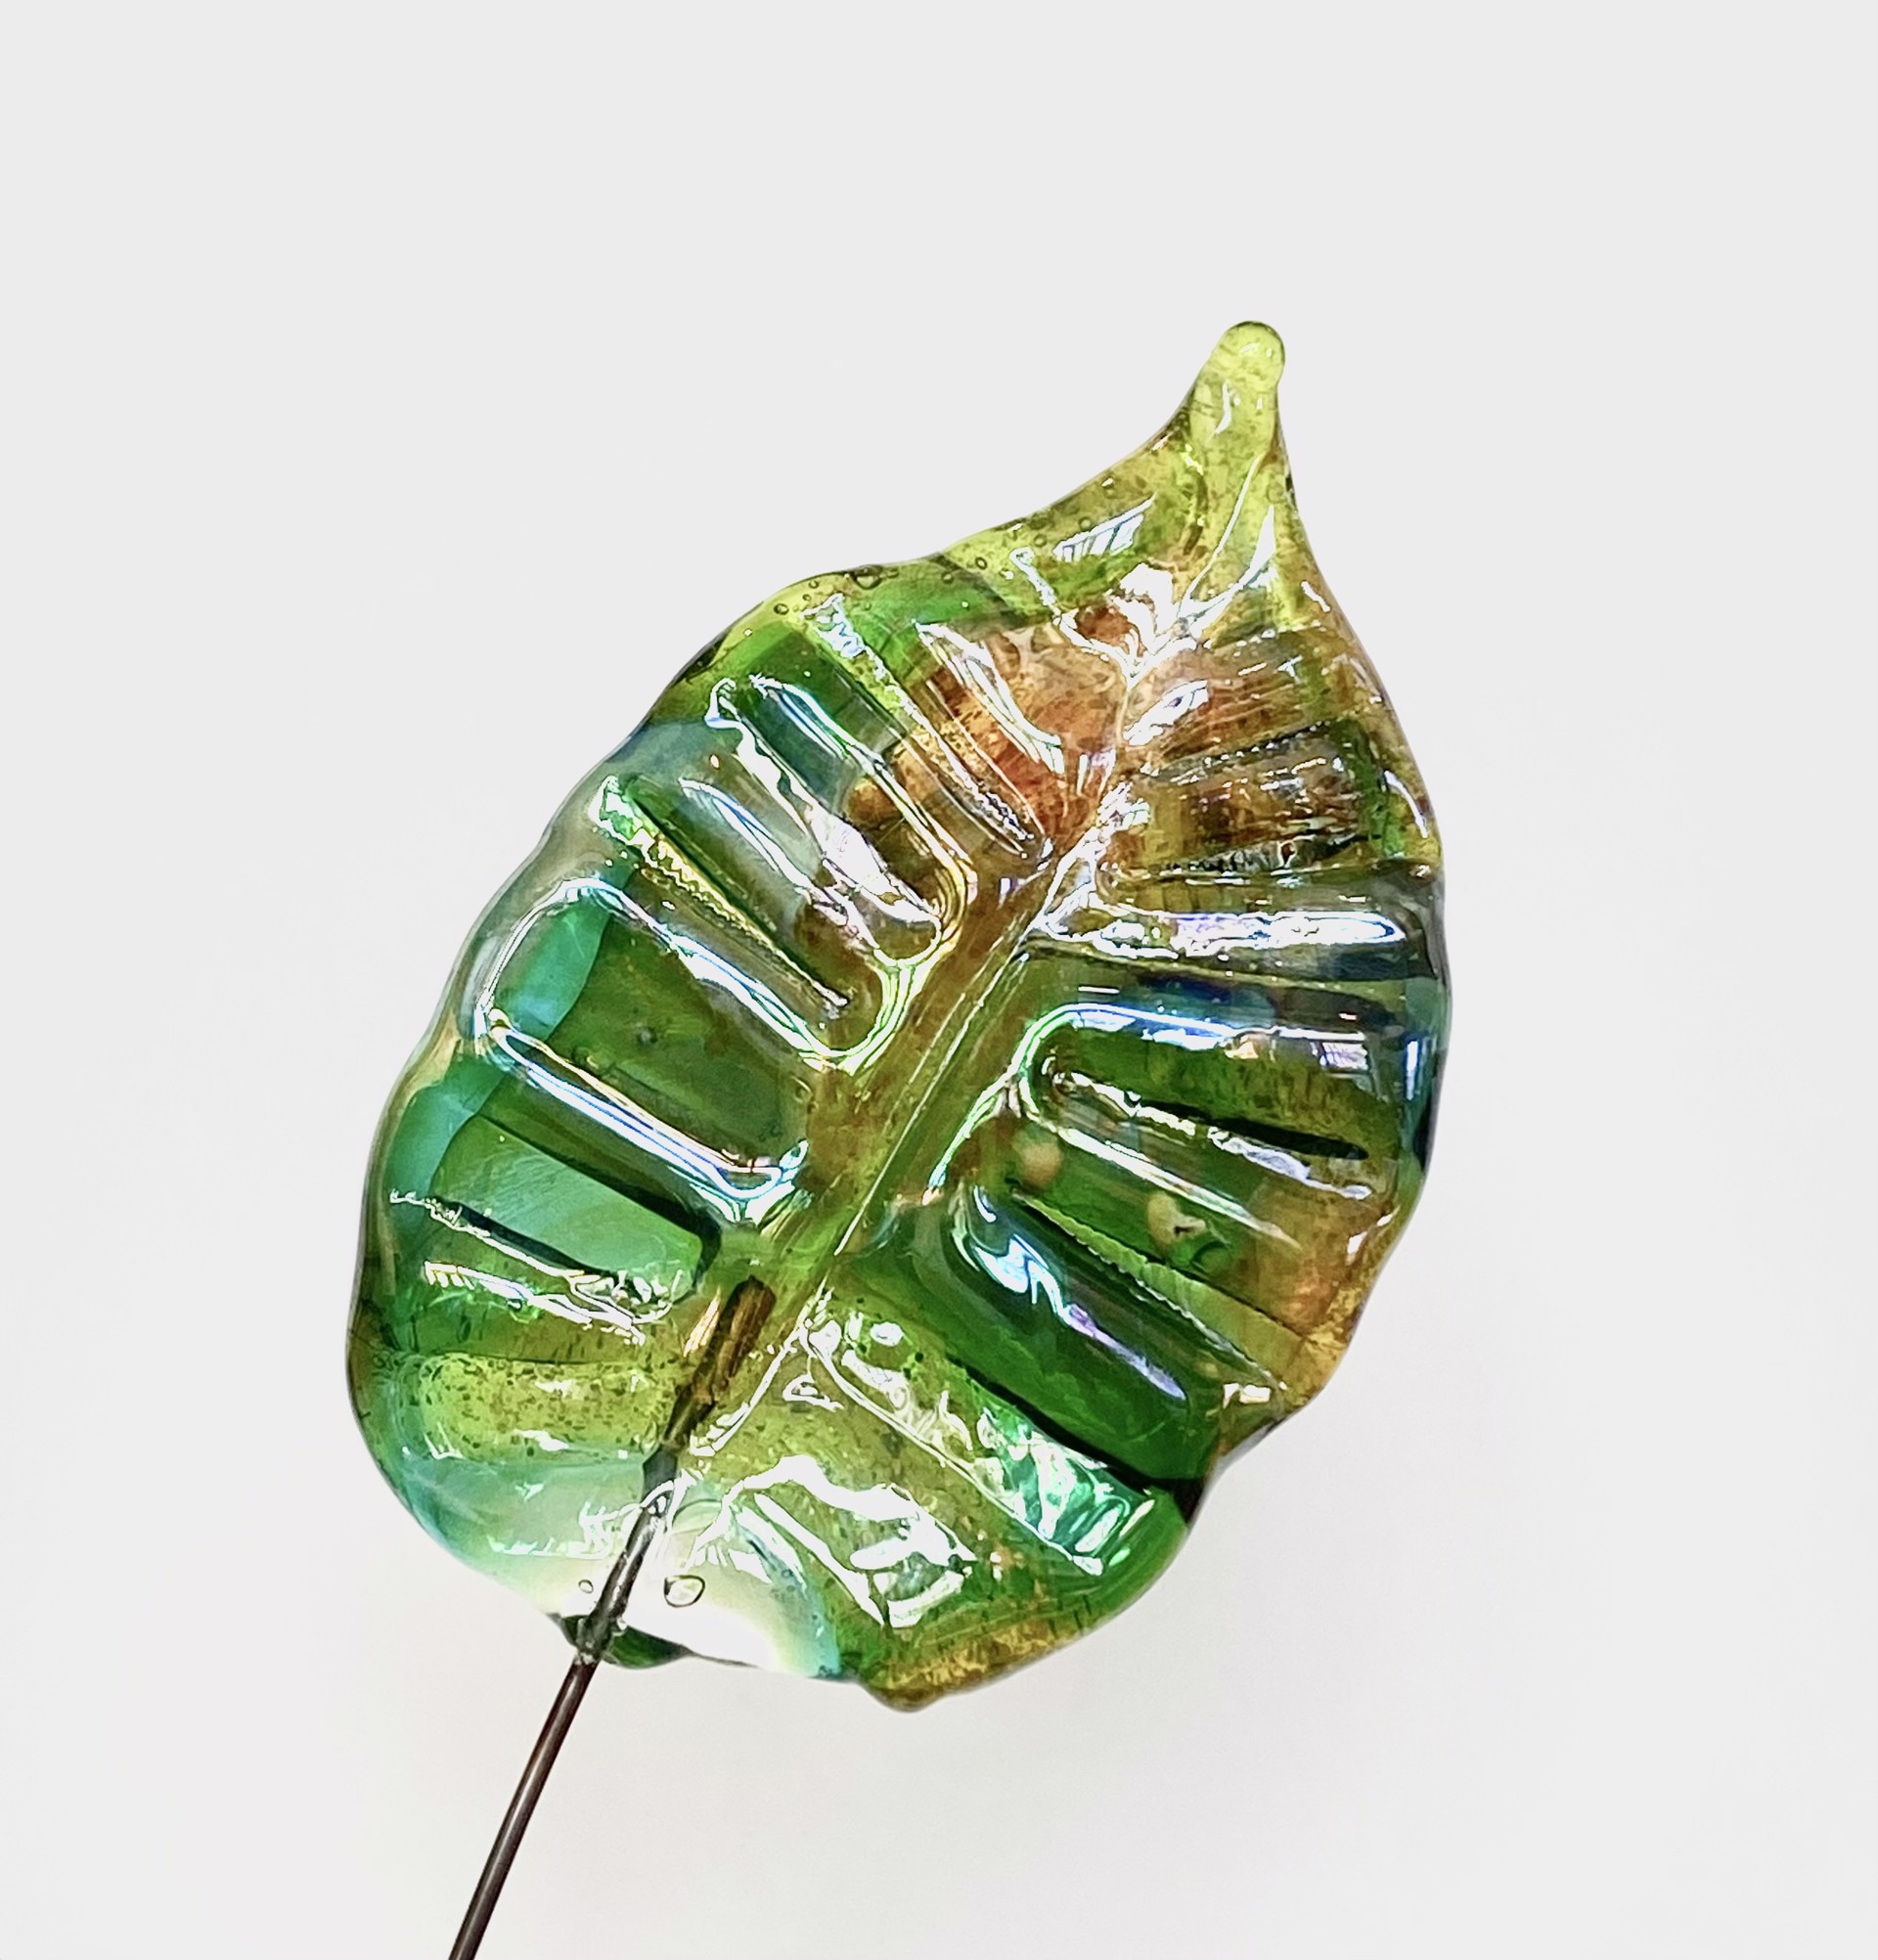 Glass Leaf 1 by Emelie Hebert